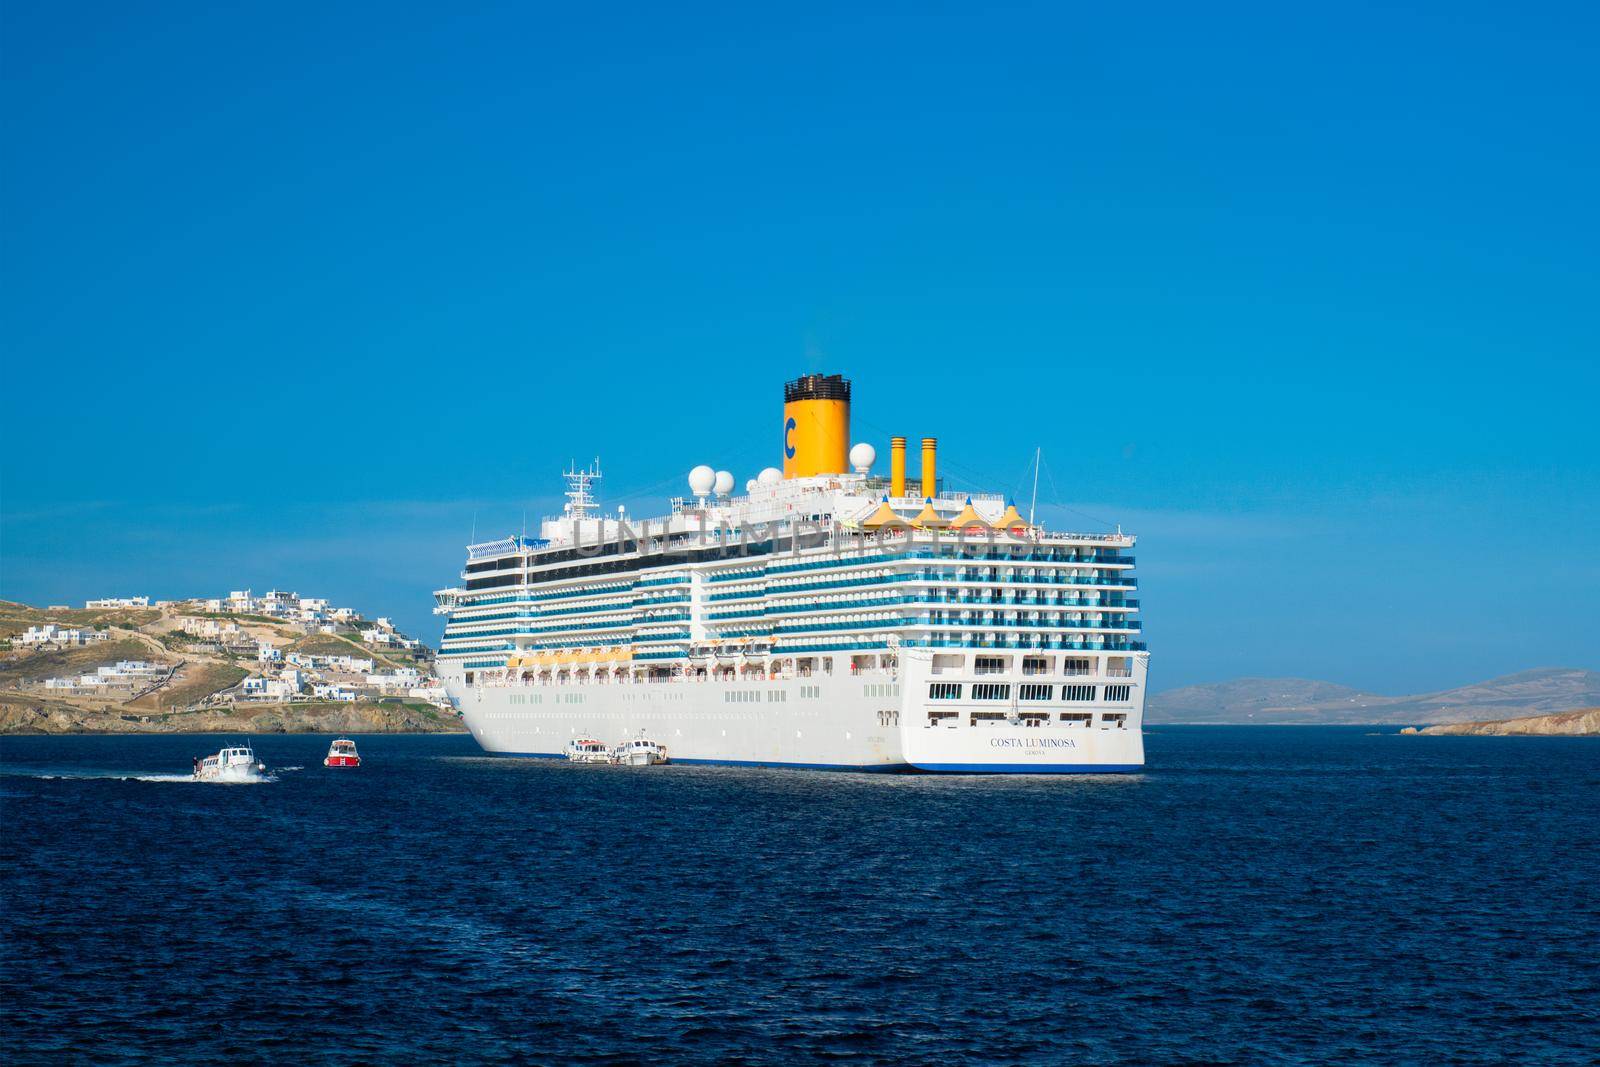 Cruise liner ship Costa Luminosa in Mediterranea sea near Mykonos island. Aegean sea, Greece by dimol